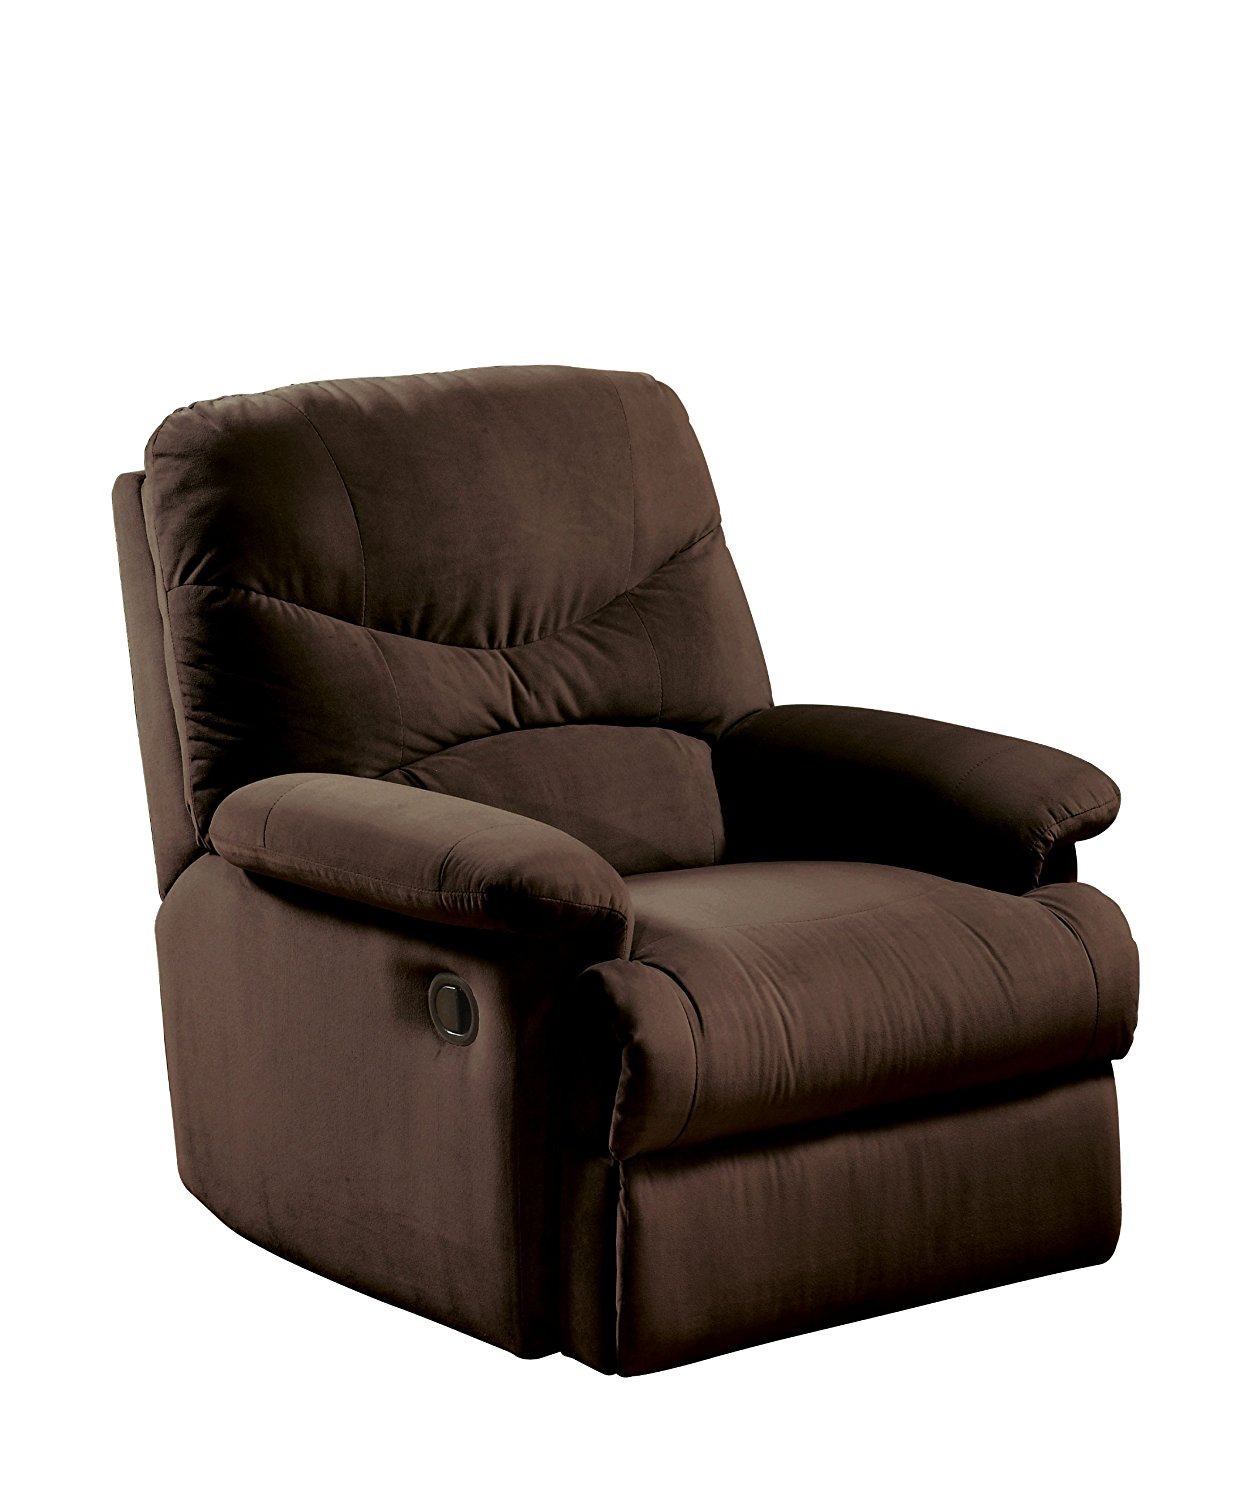 recliner chairs amazon.com: acme 00632 arcadia recliner, oakwood chocolate microfiber:  kitchen u0026 dining DCUIVOH